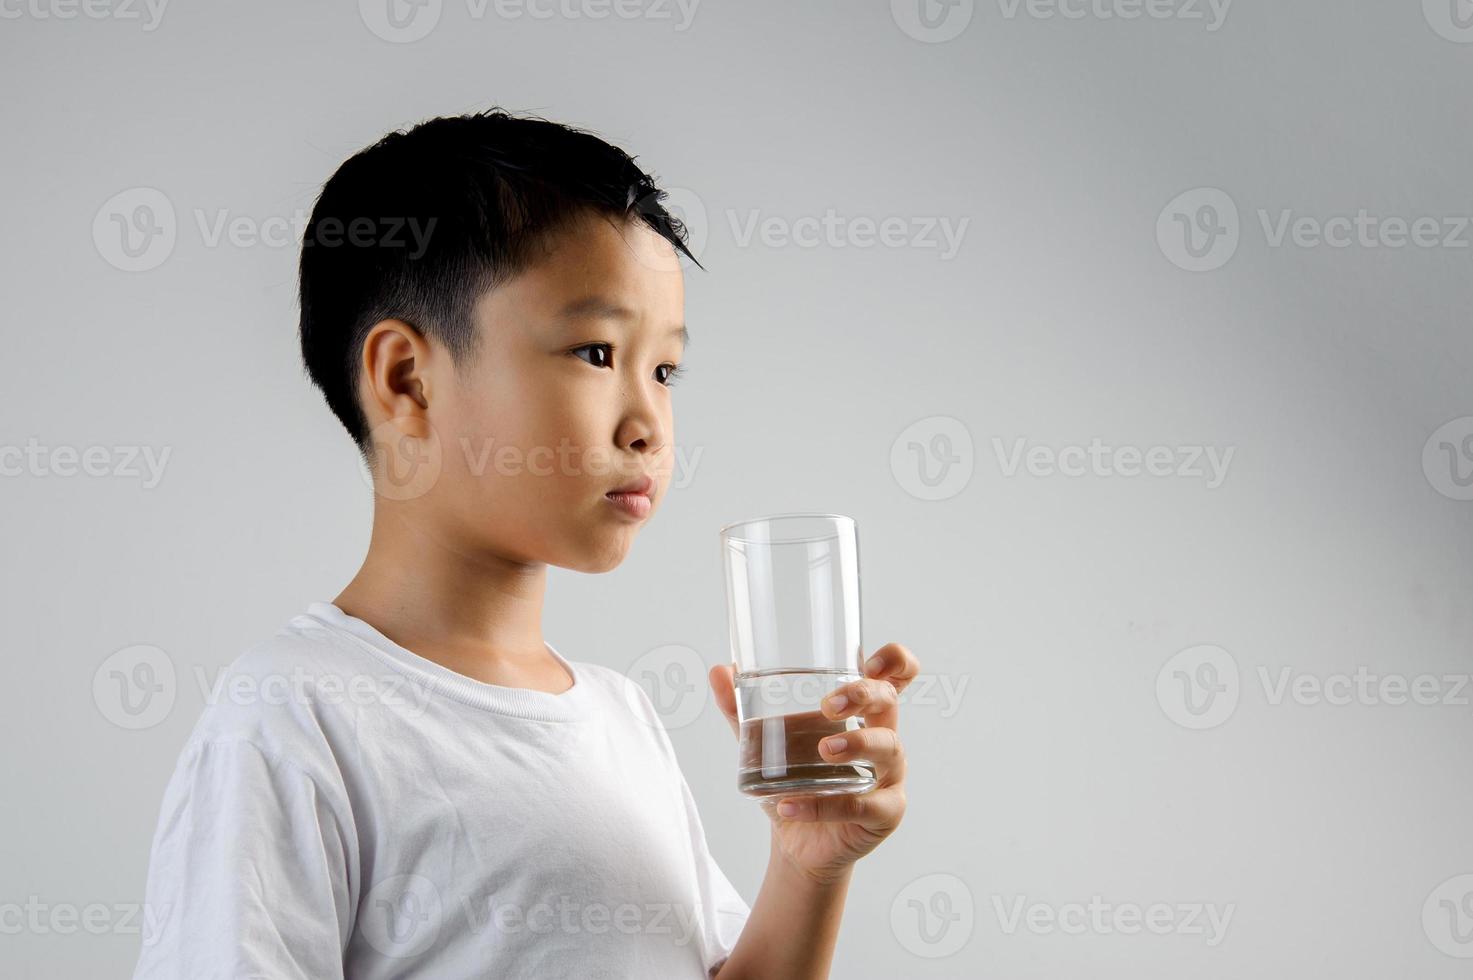 pojke dricker vatten från glas foto